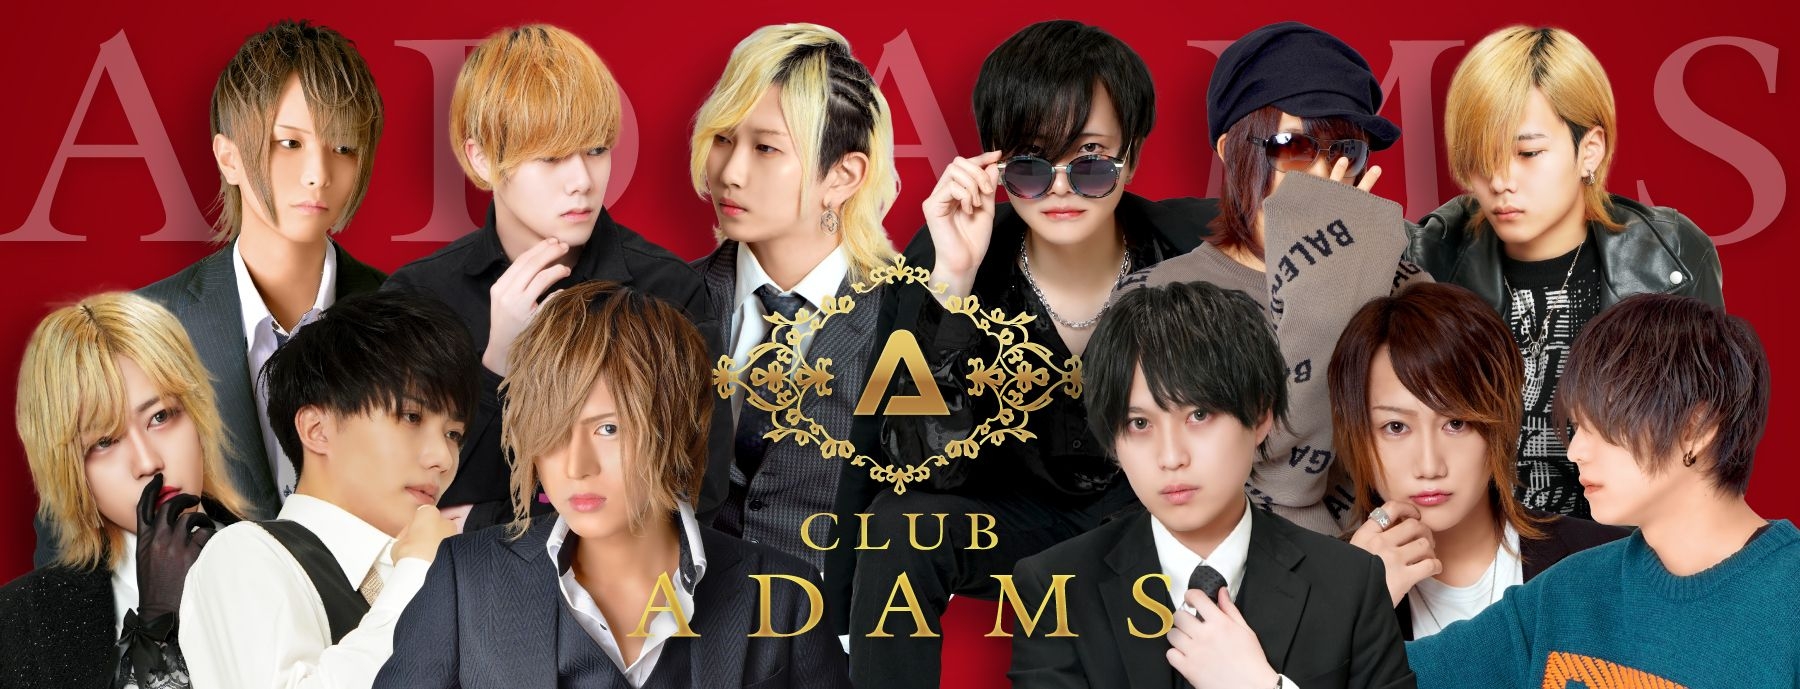 CLUB ADAMS 〜アダムス〜